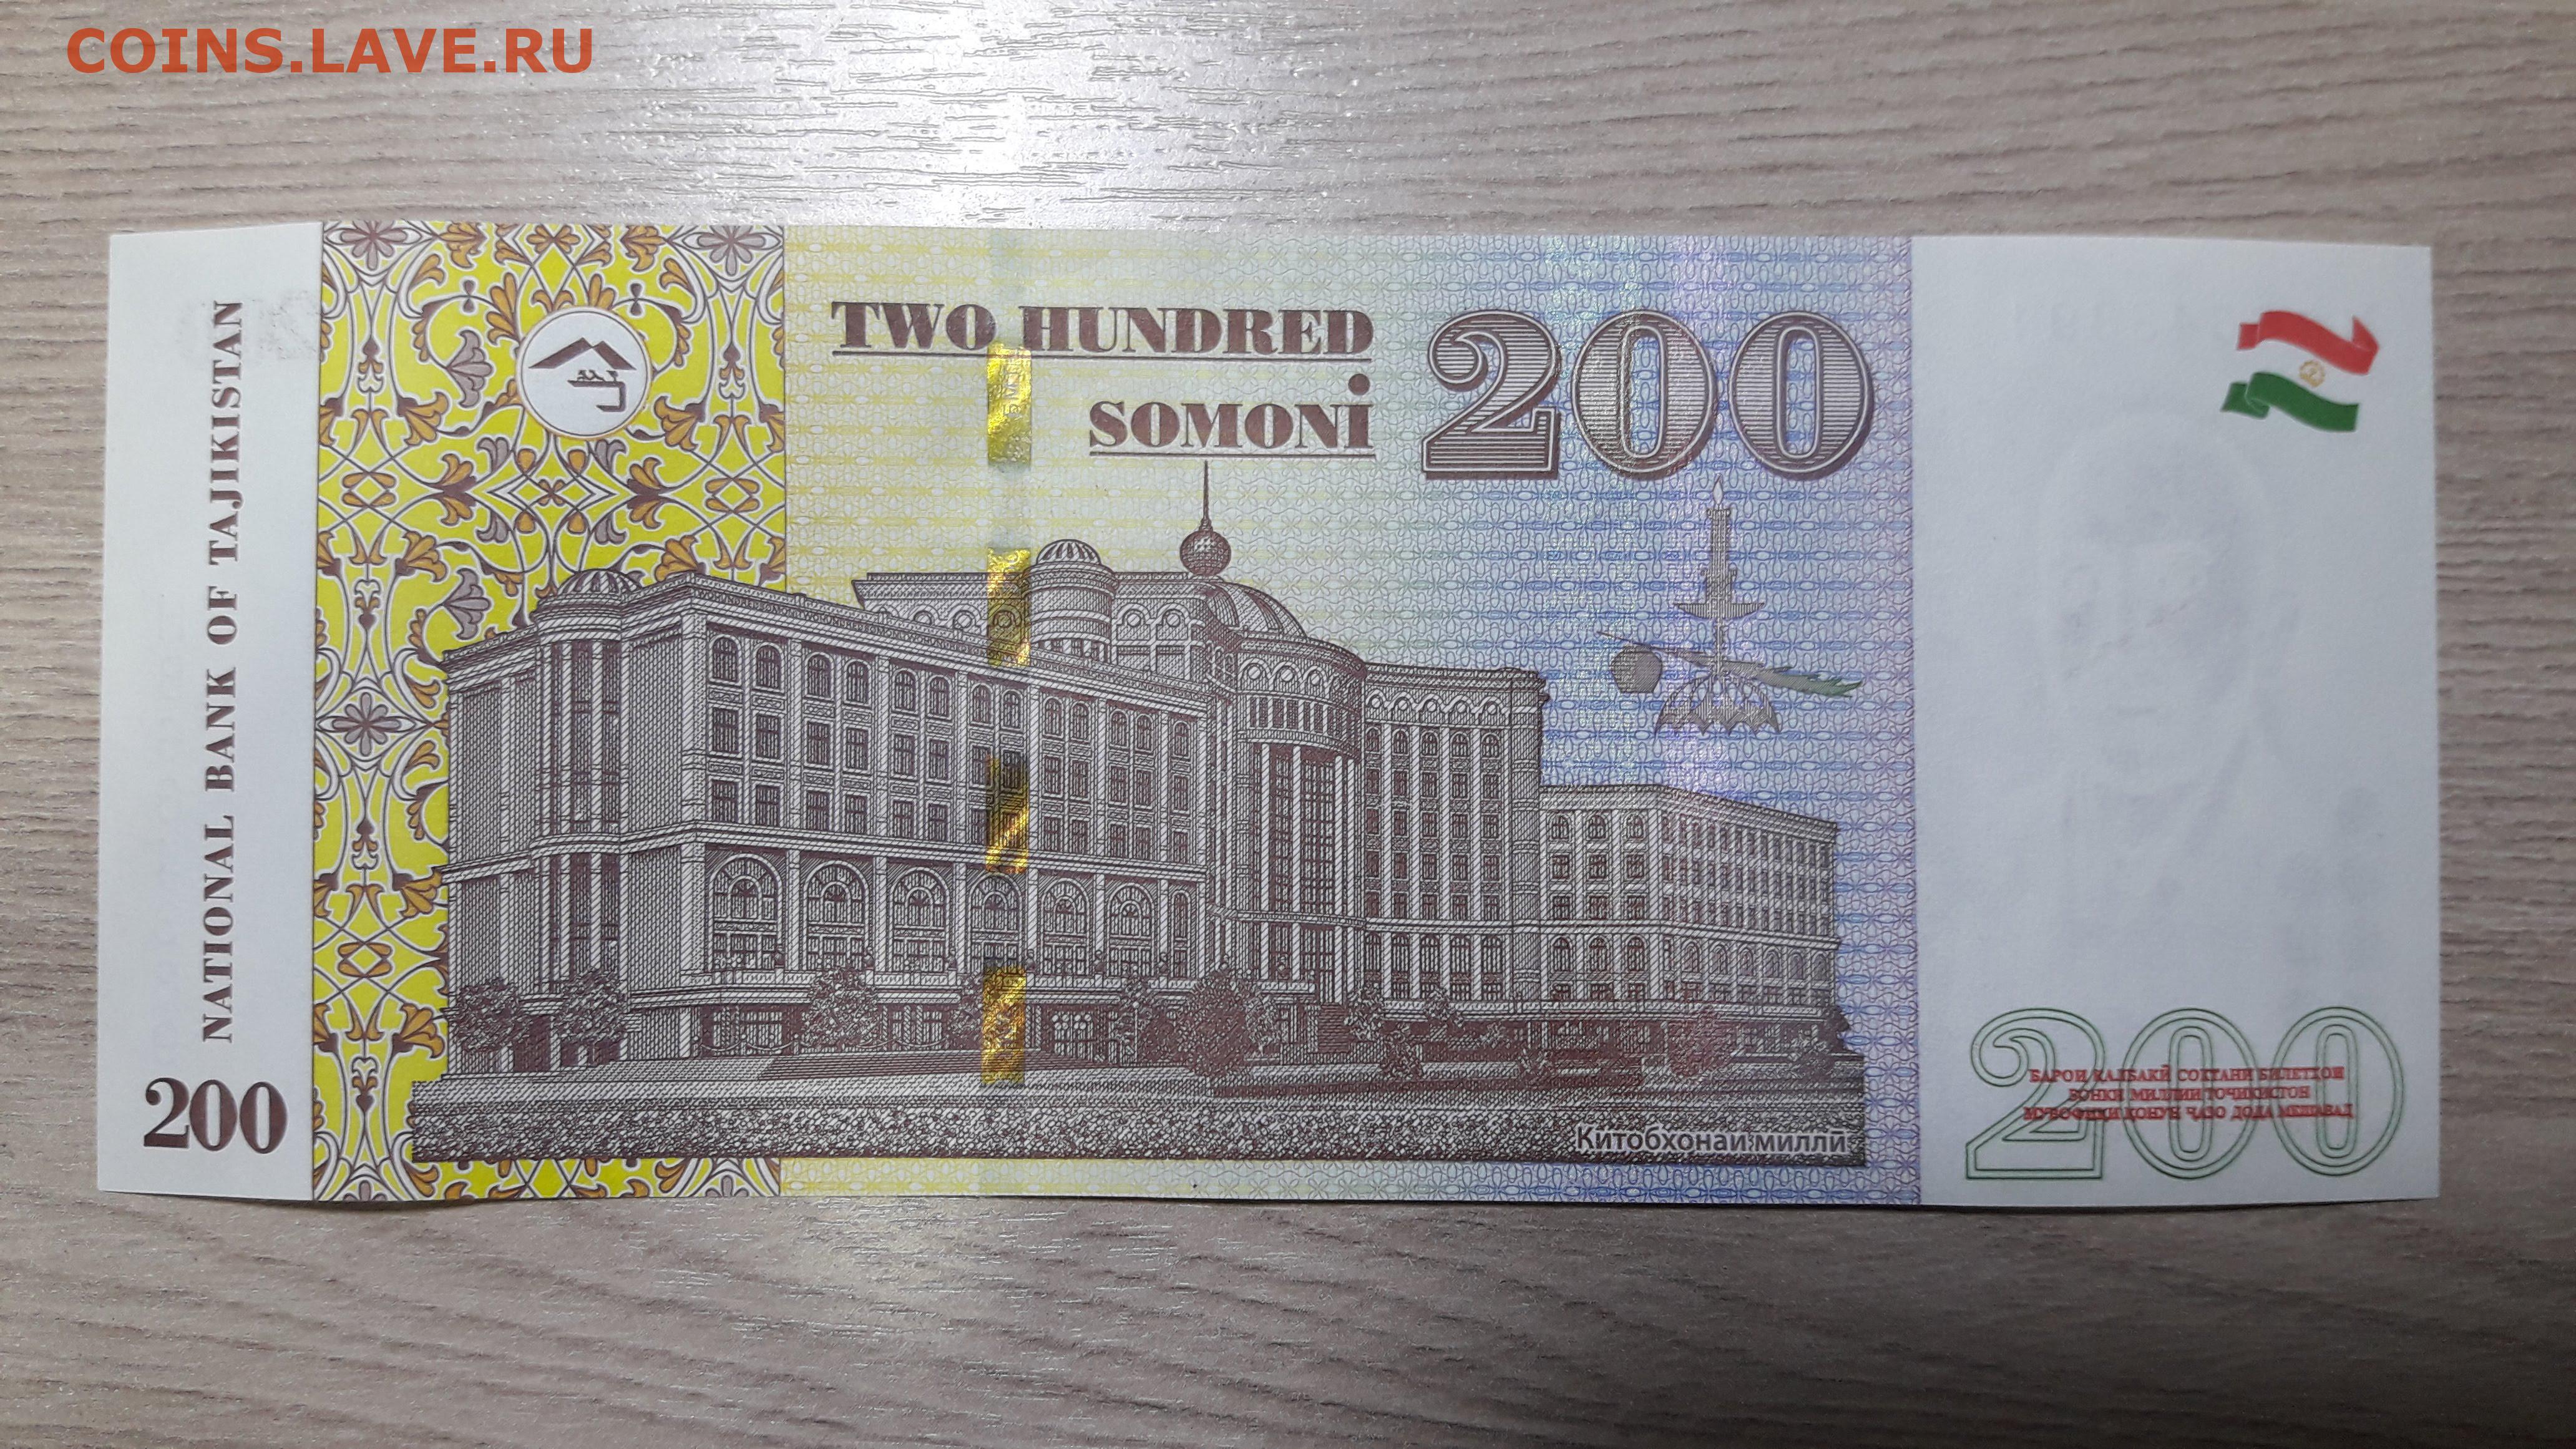 5000 рублей таджикистана на сегодня. 200 Сомони. Купюра Сомони. Деньги Таджикистана. Купюра 10 Сомони.